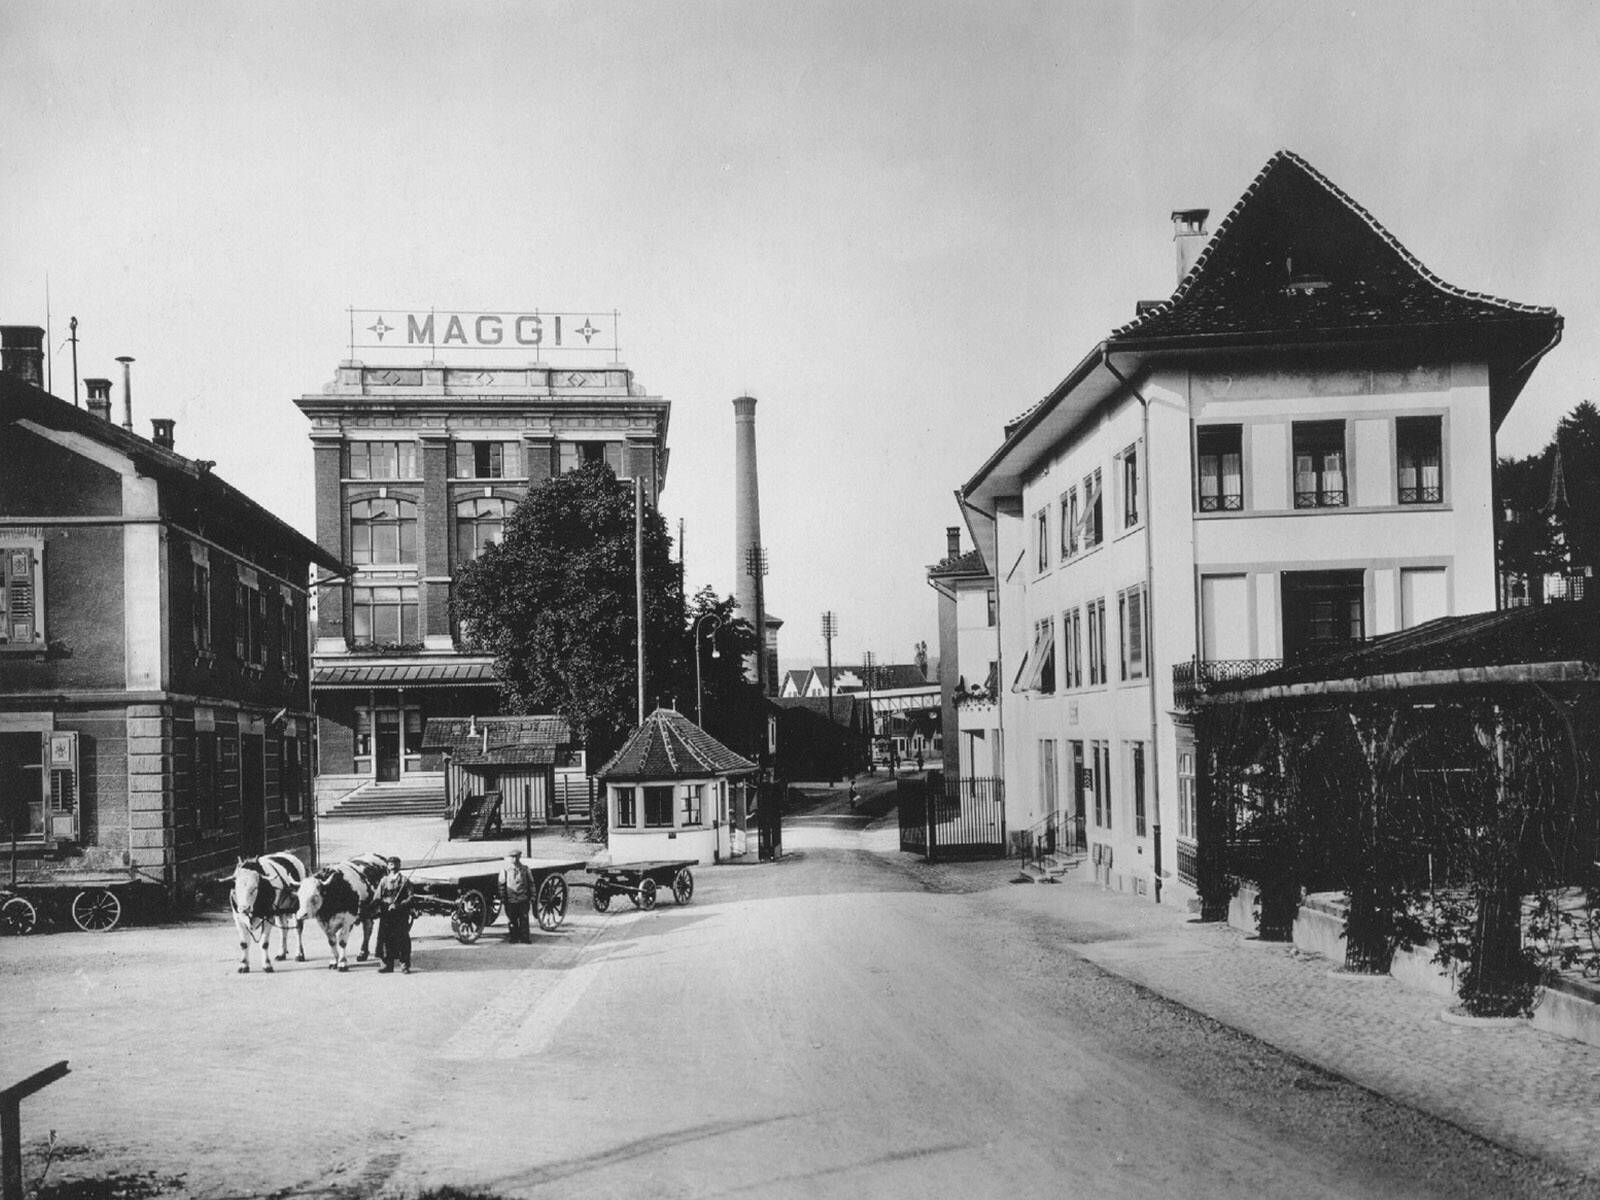 Zoom: Ehemalige Maggi-Fabrik in Kemptthal, Fotografie von 1913.